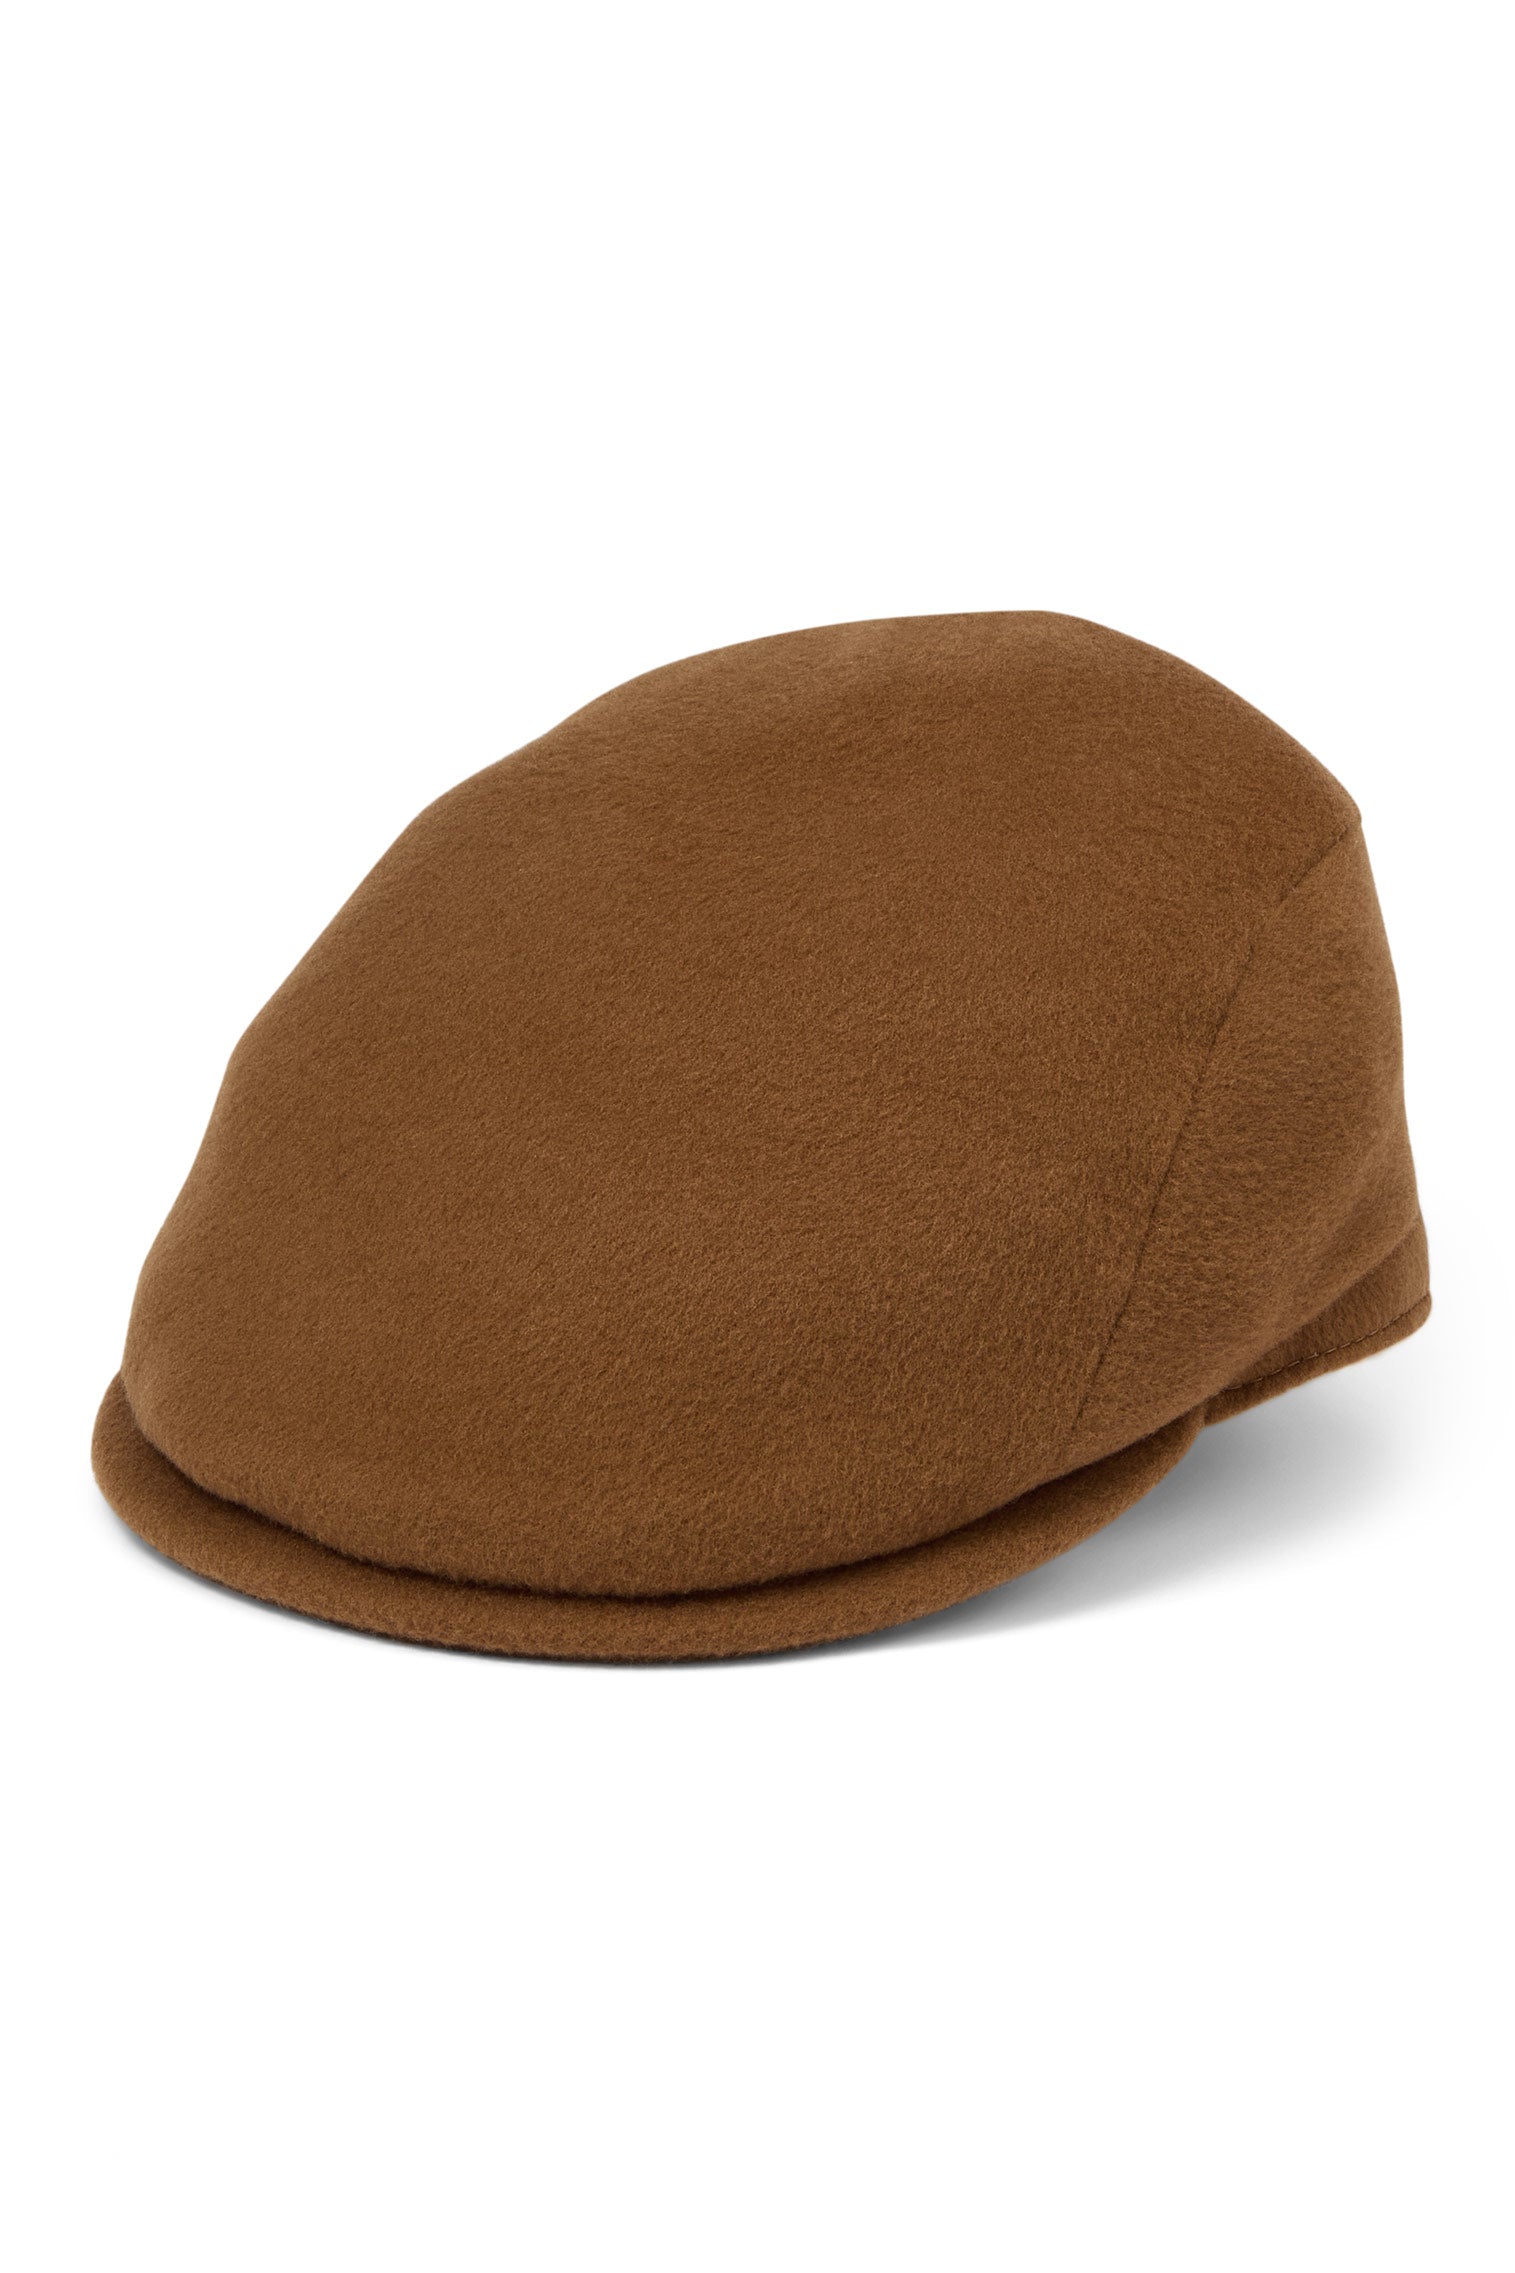 The Auric - Escorial Wool Hats - Lock & Co. Hatters London UK